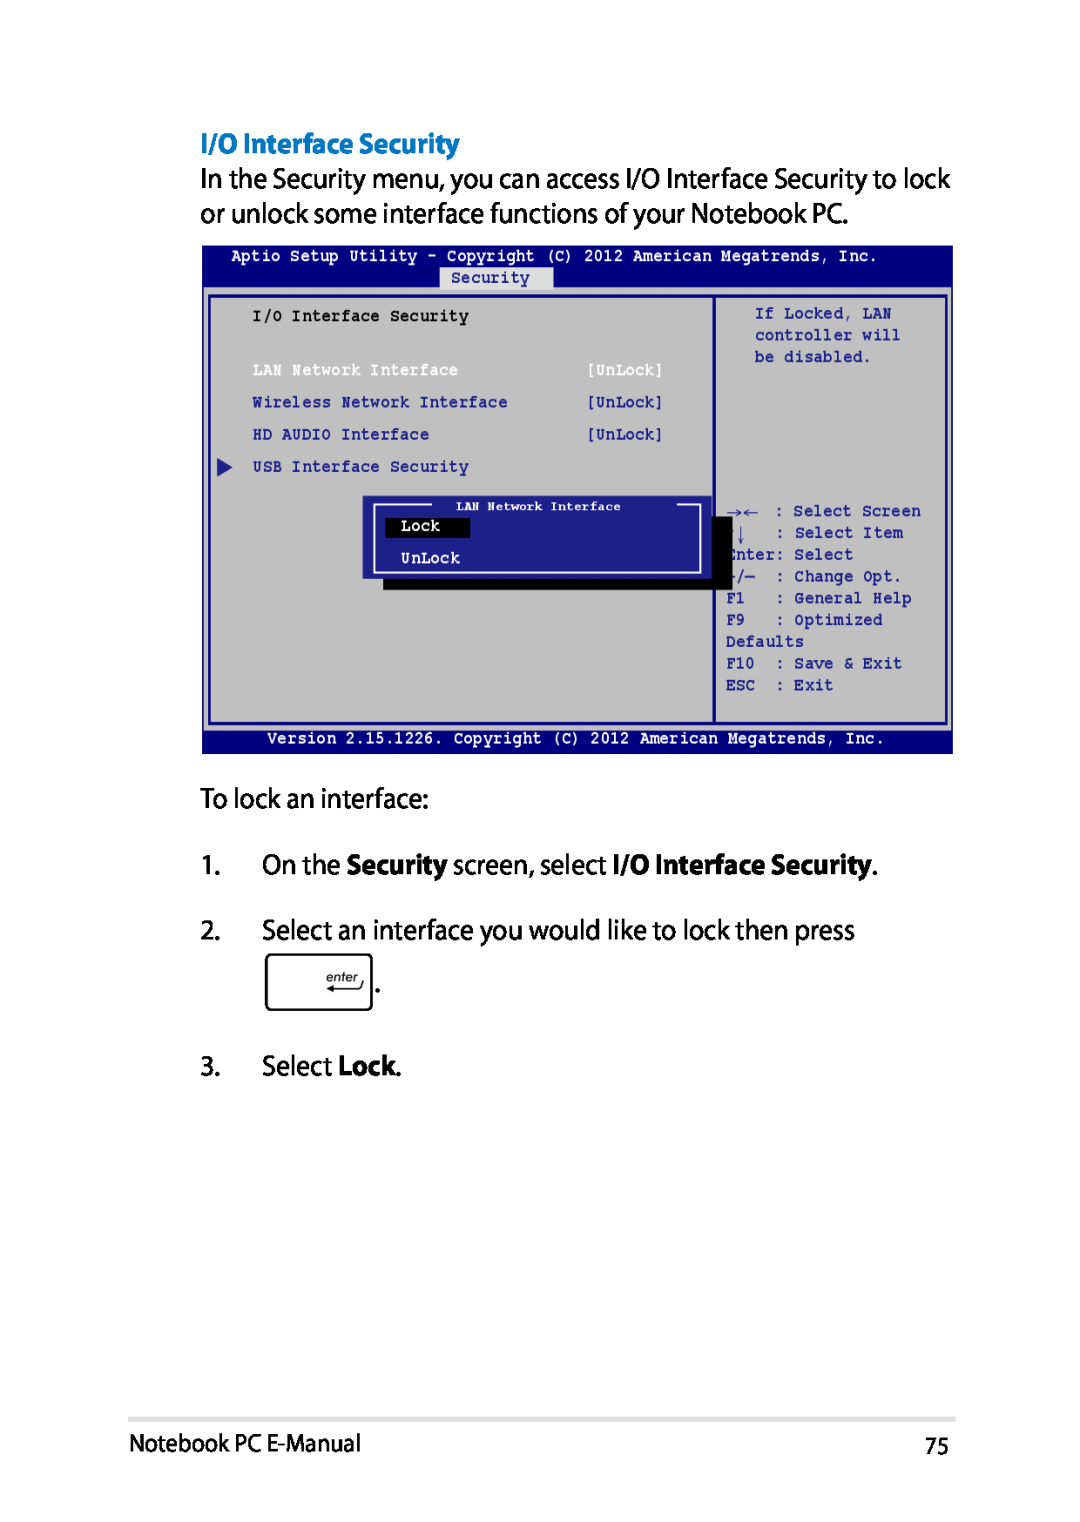 Asus E8438 I/O Interface Security, Notebook PC E-Manual, Aptio Setup Utility - Copyright C 2012 American Megatrends, Inc 